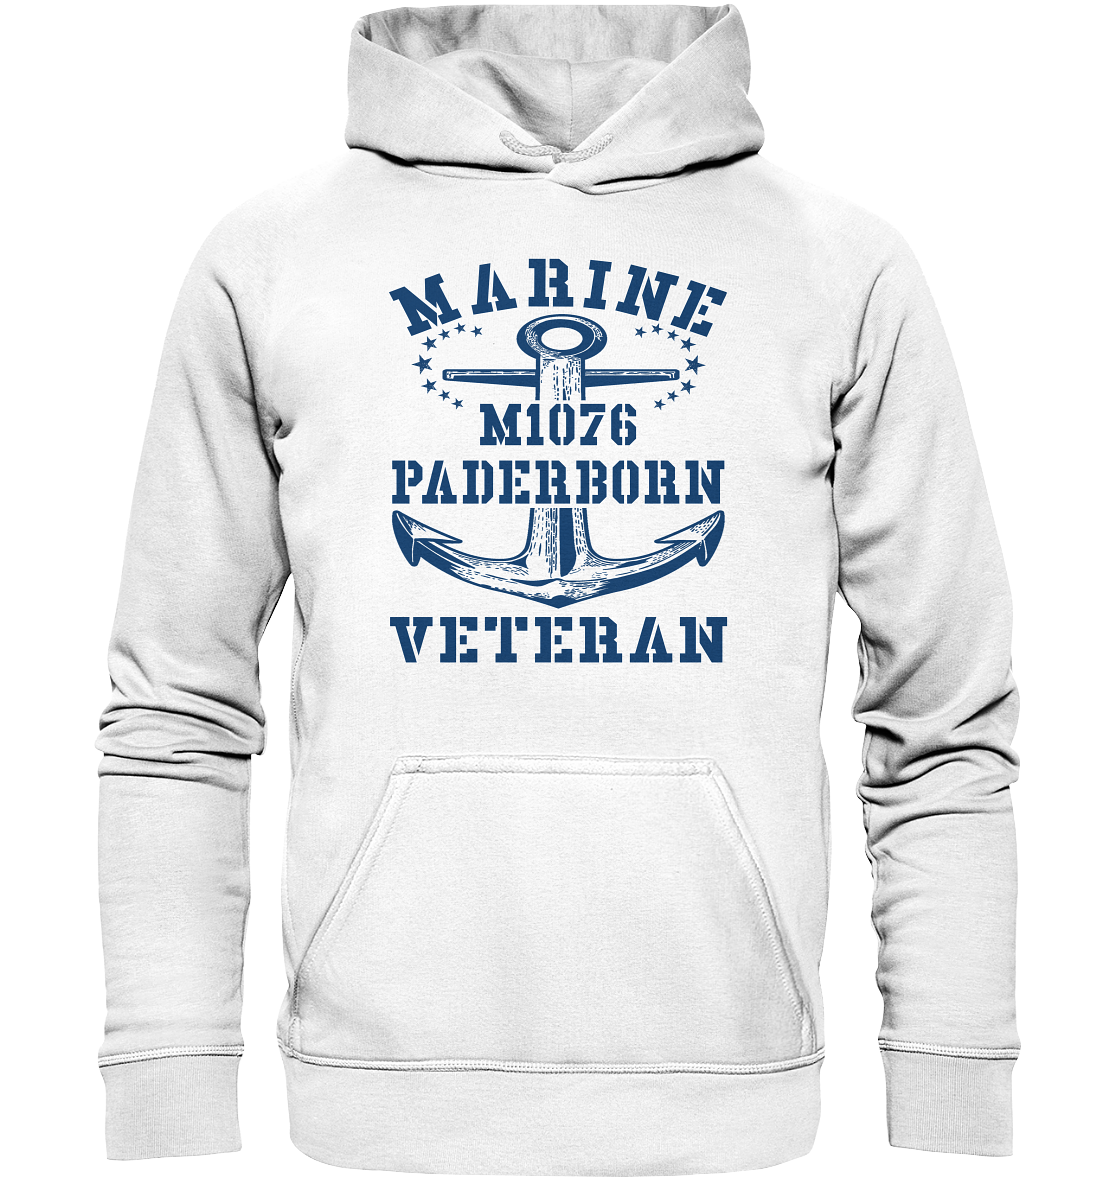 MARINE VETERAN M1076 PADERBORN - Basic Unisex Hoodie